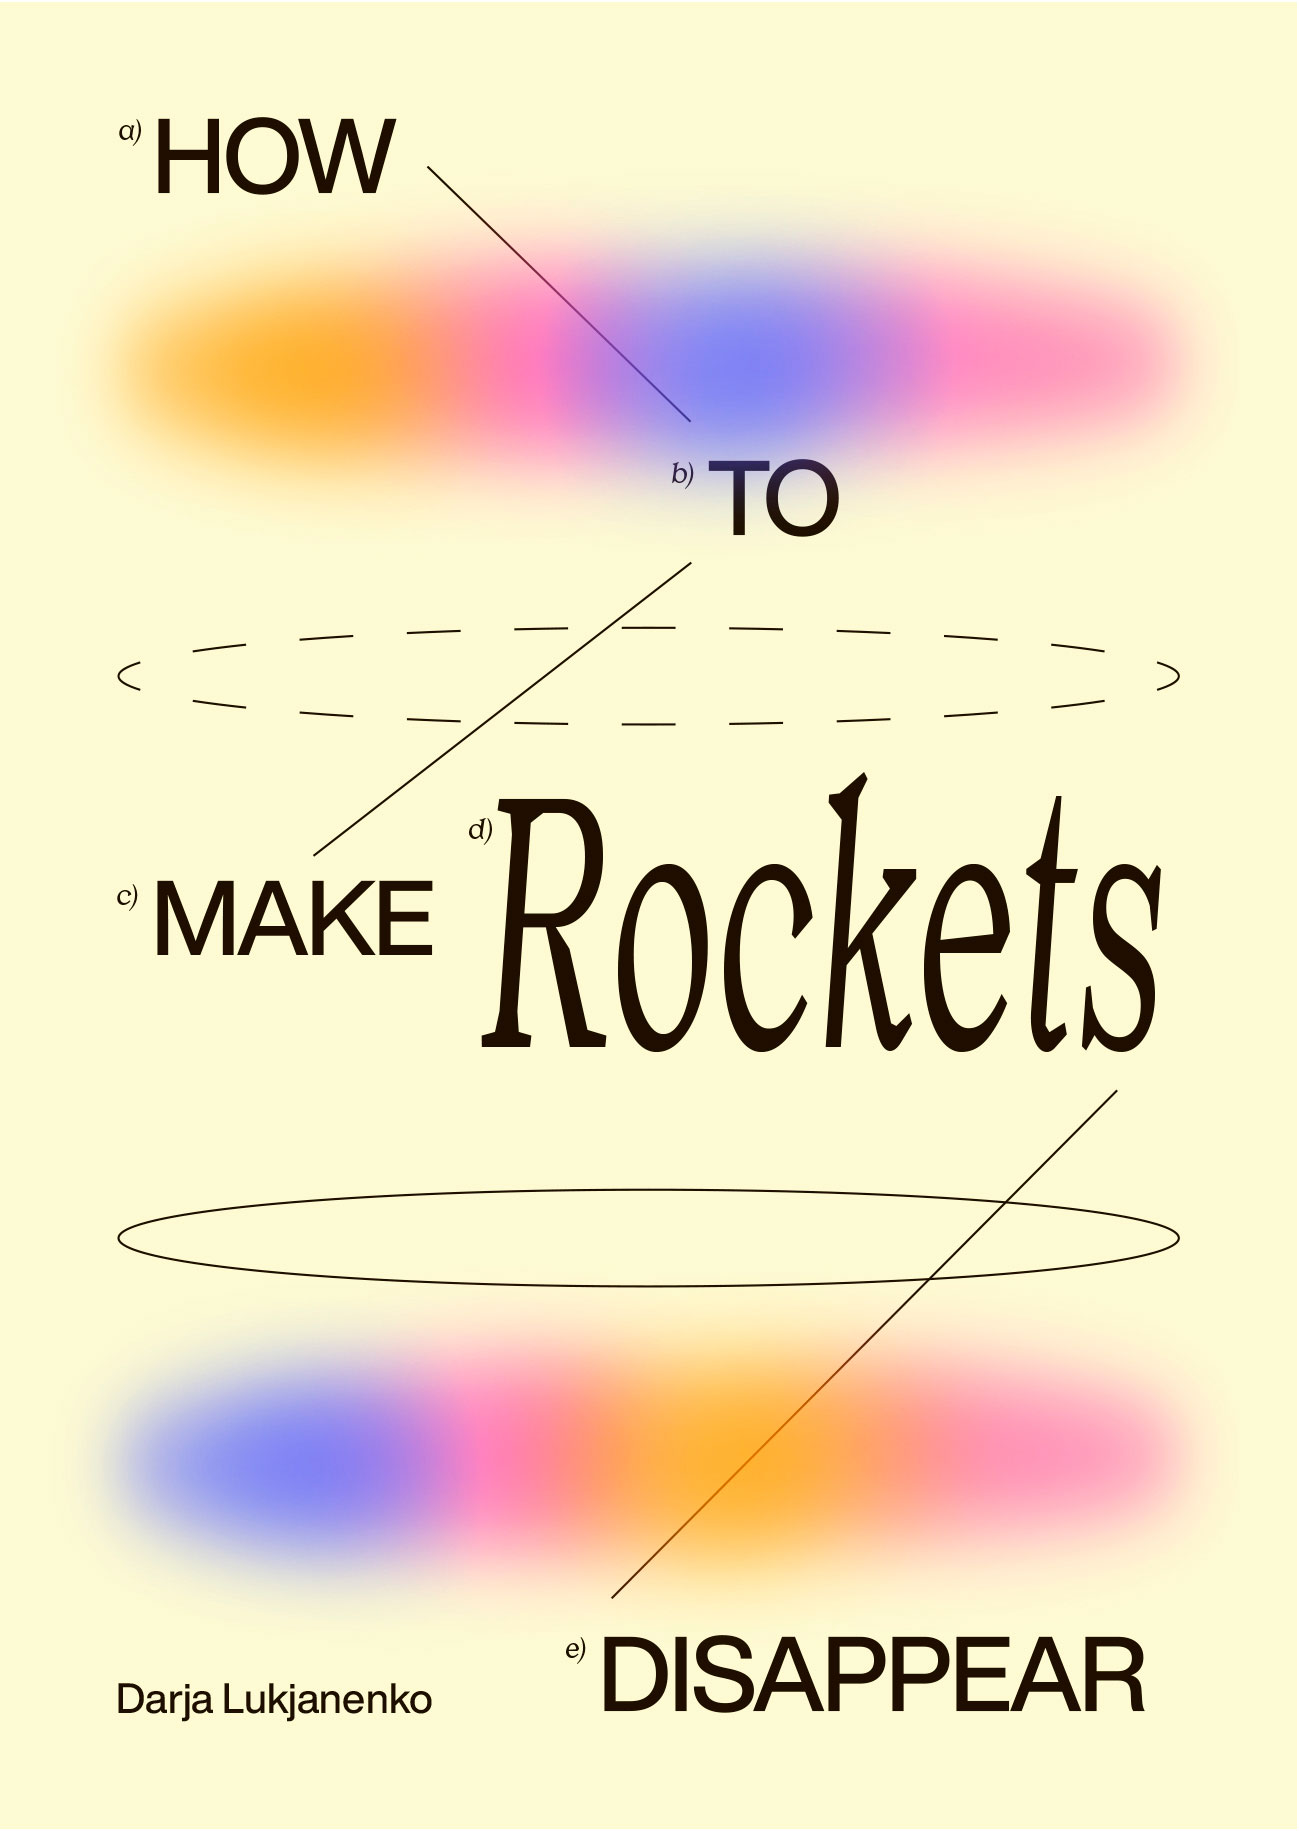 online publication How to make rockets disappear (collaboration: Polina Bakanova)